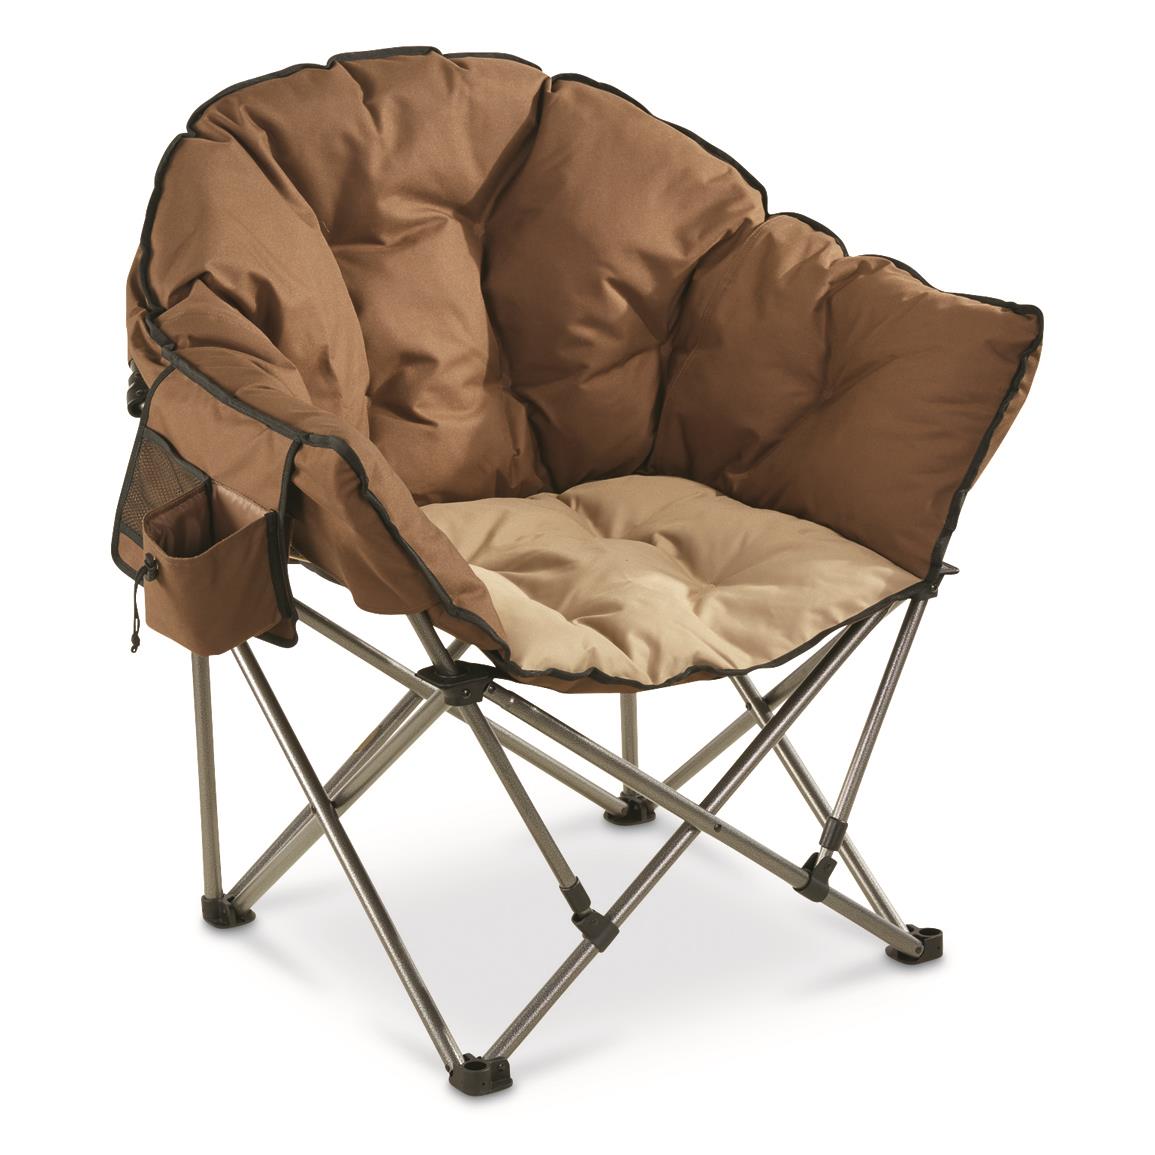 Camping chair shown in Tan / Brown, Tan / Brown AKDJUSW